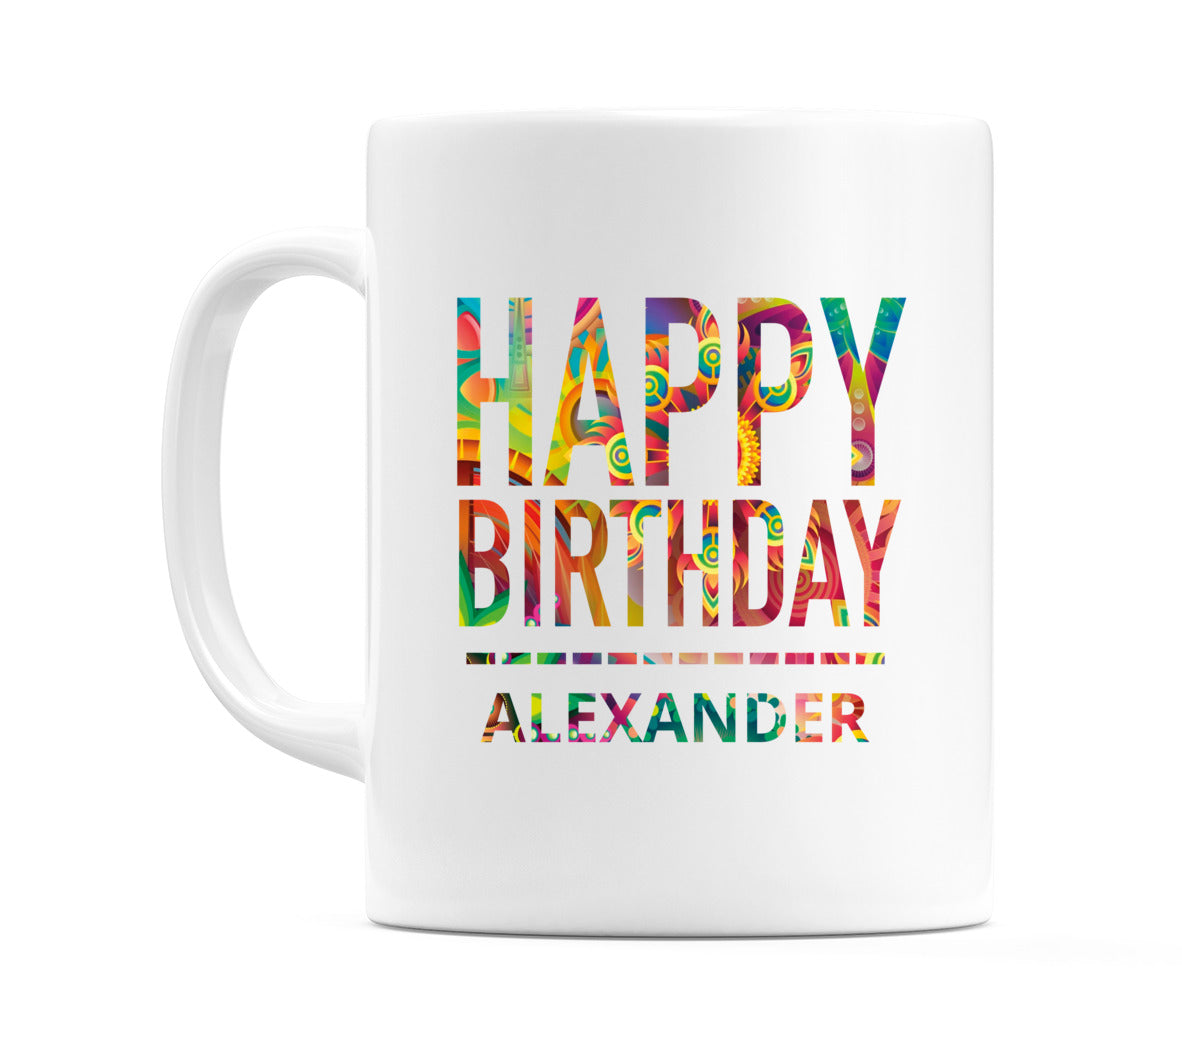 Happy Birthday Alexander (Tie Dye Effect) Mug Cup by WeDoMugs